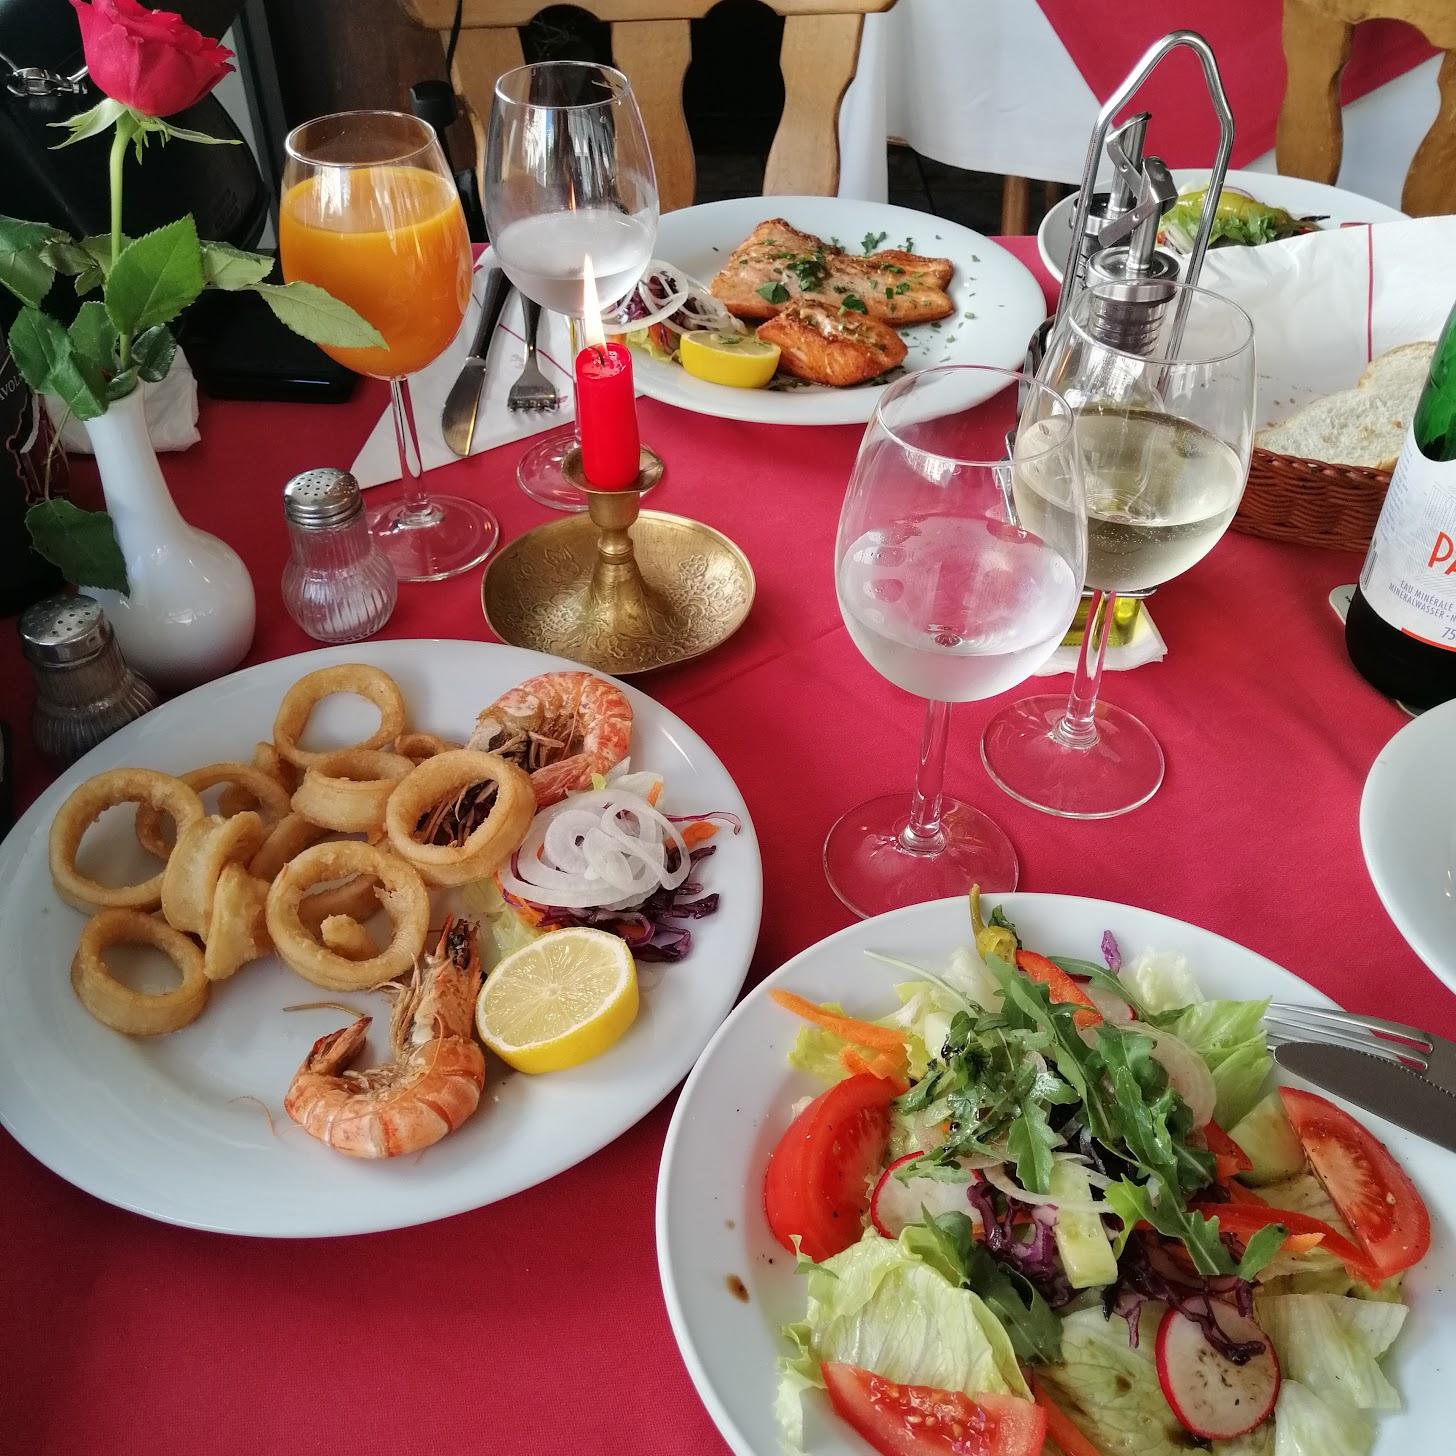 Restaurant "Bella Italia" in Hannover